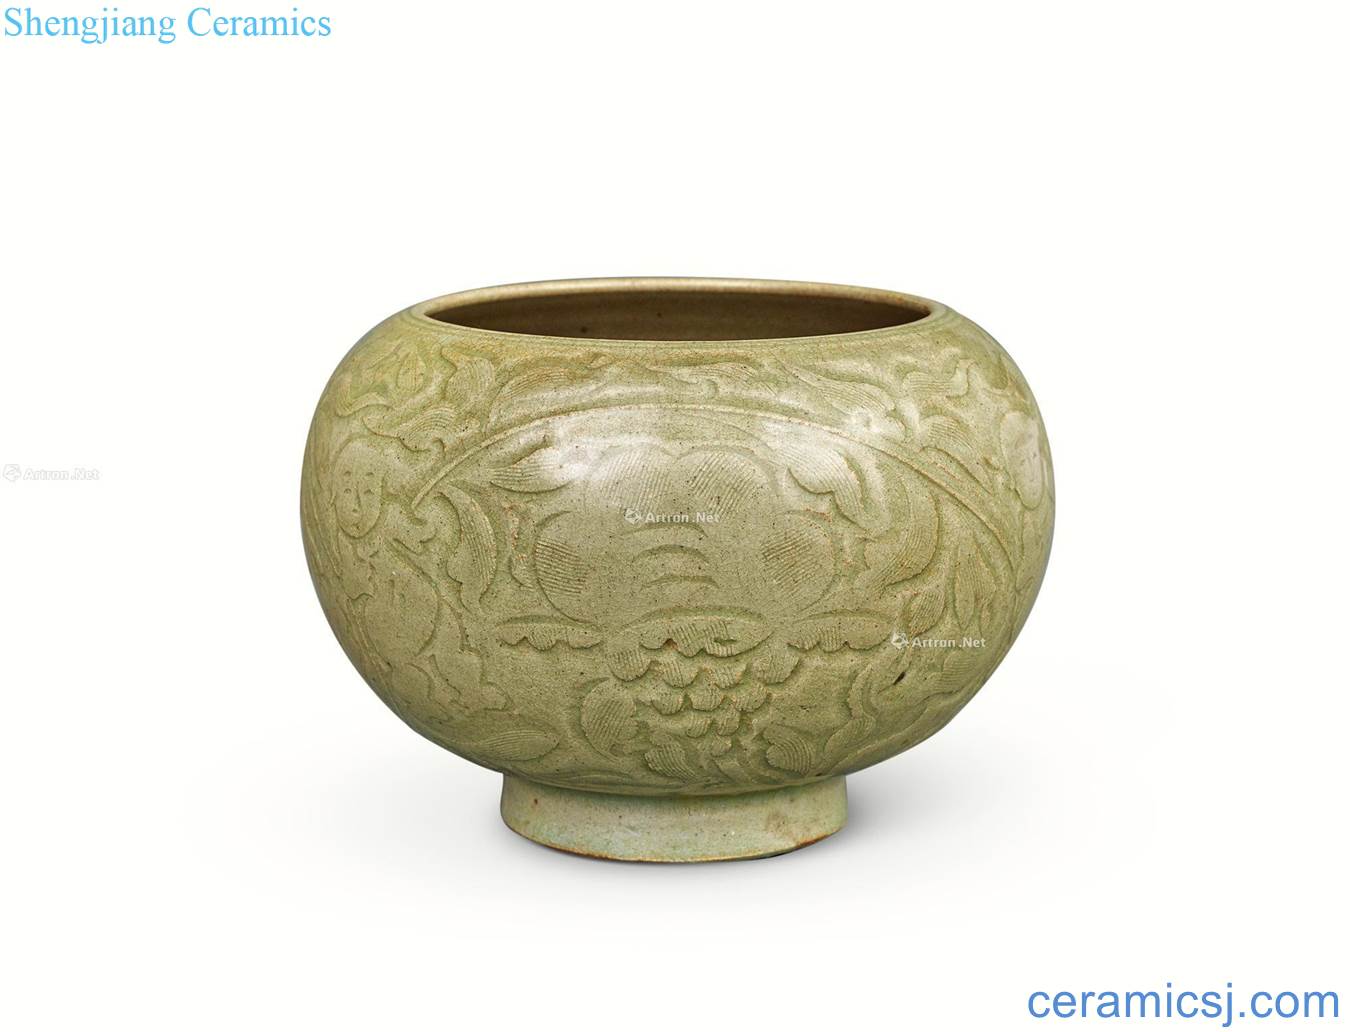 The song dynasty kiln celadon dark carved decorative pattern